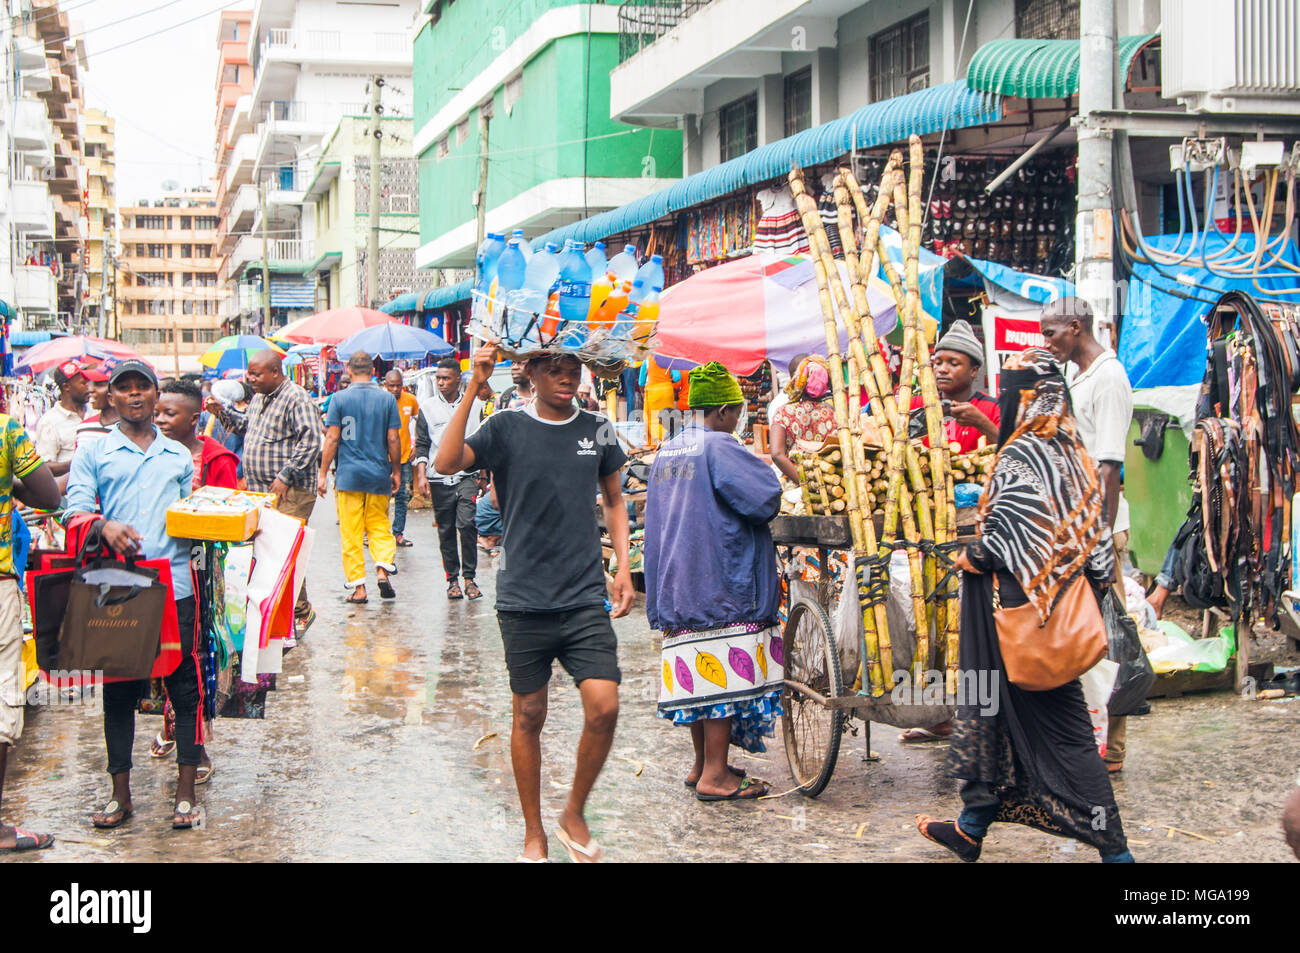 Street stalls and pedestrians in Kariakoo, Dar es Salaam, Tanzania Stock Photo